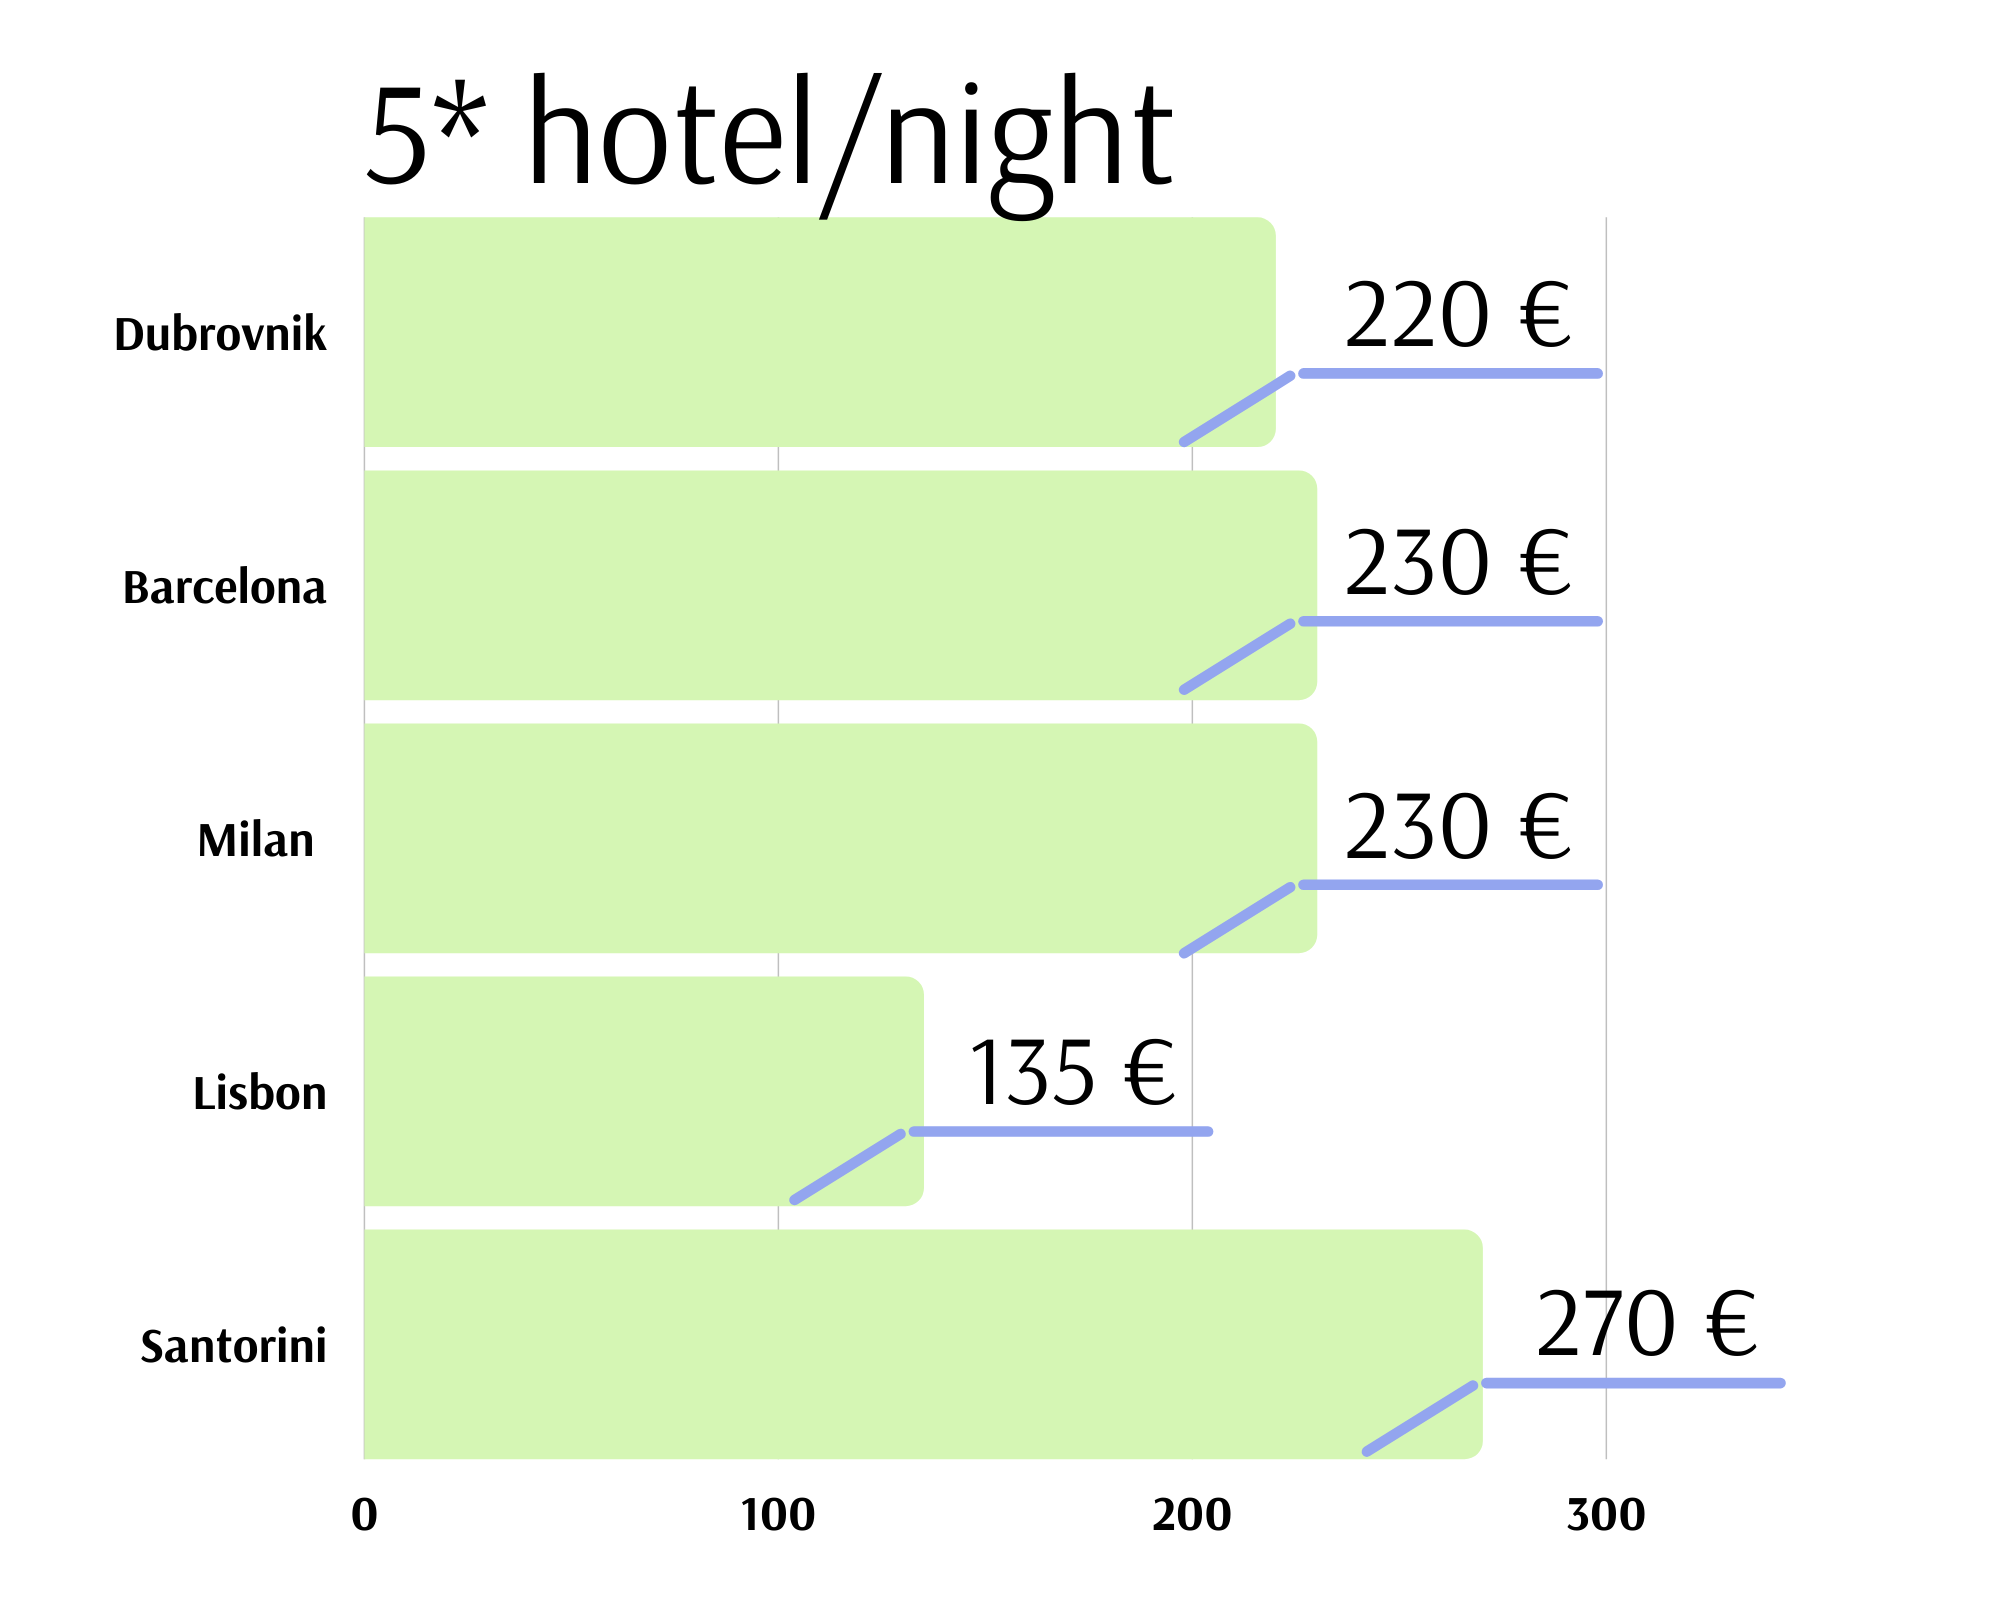 5* hotel/night